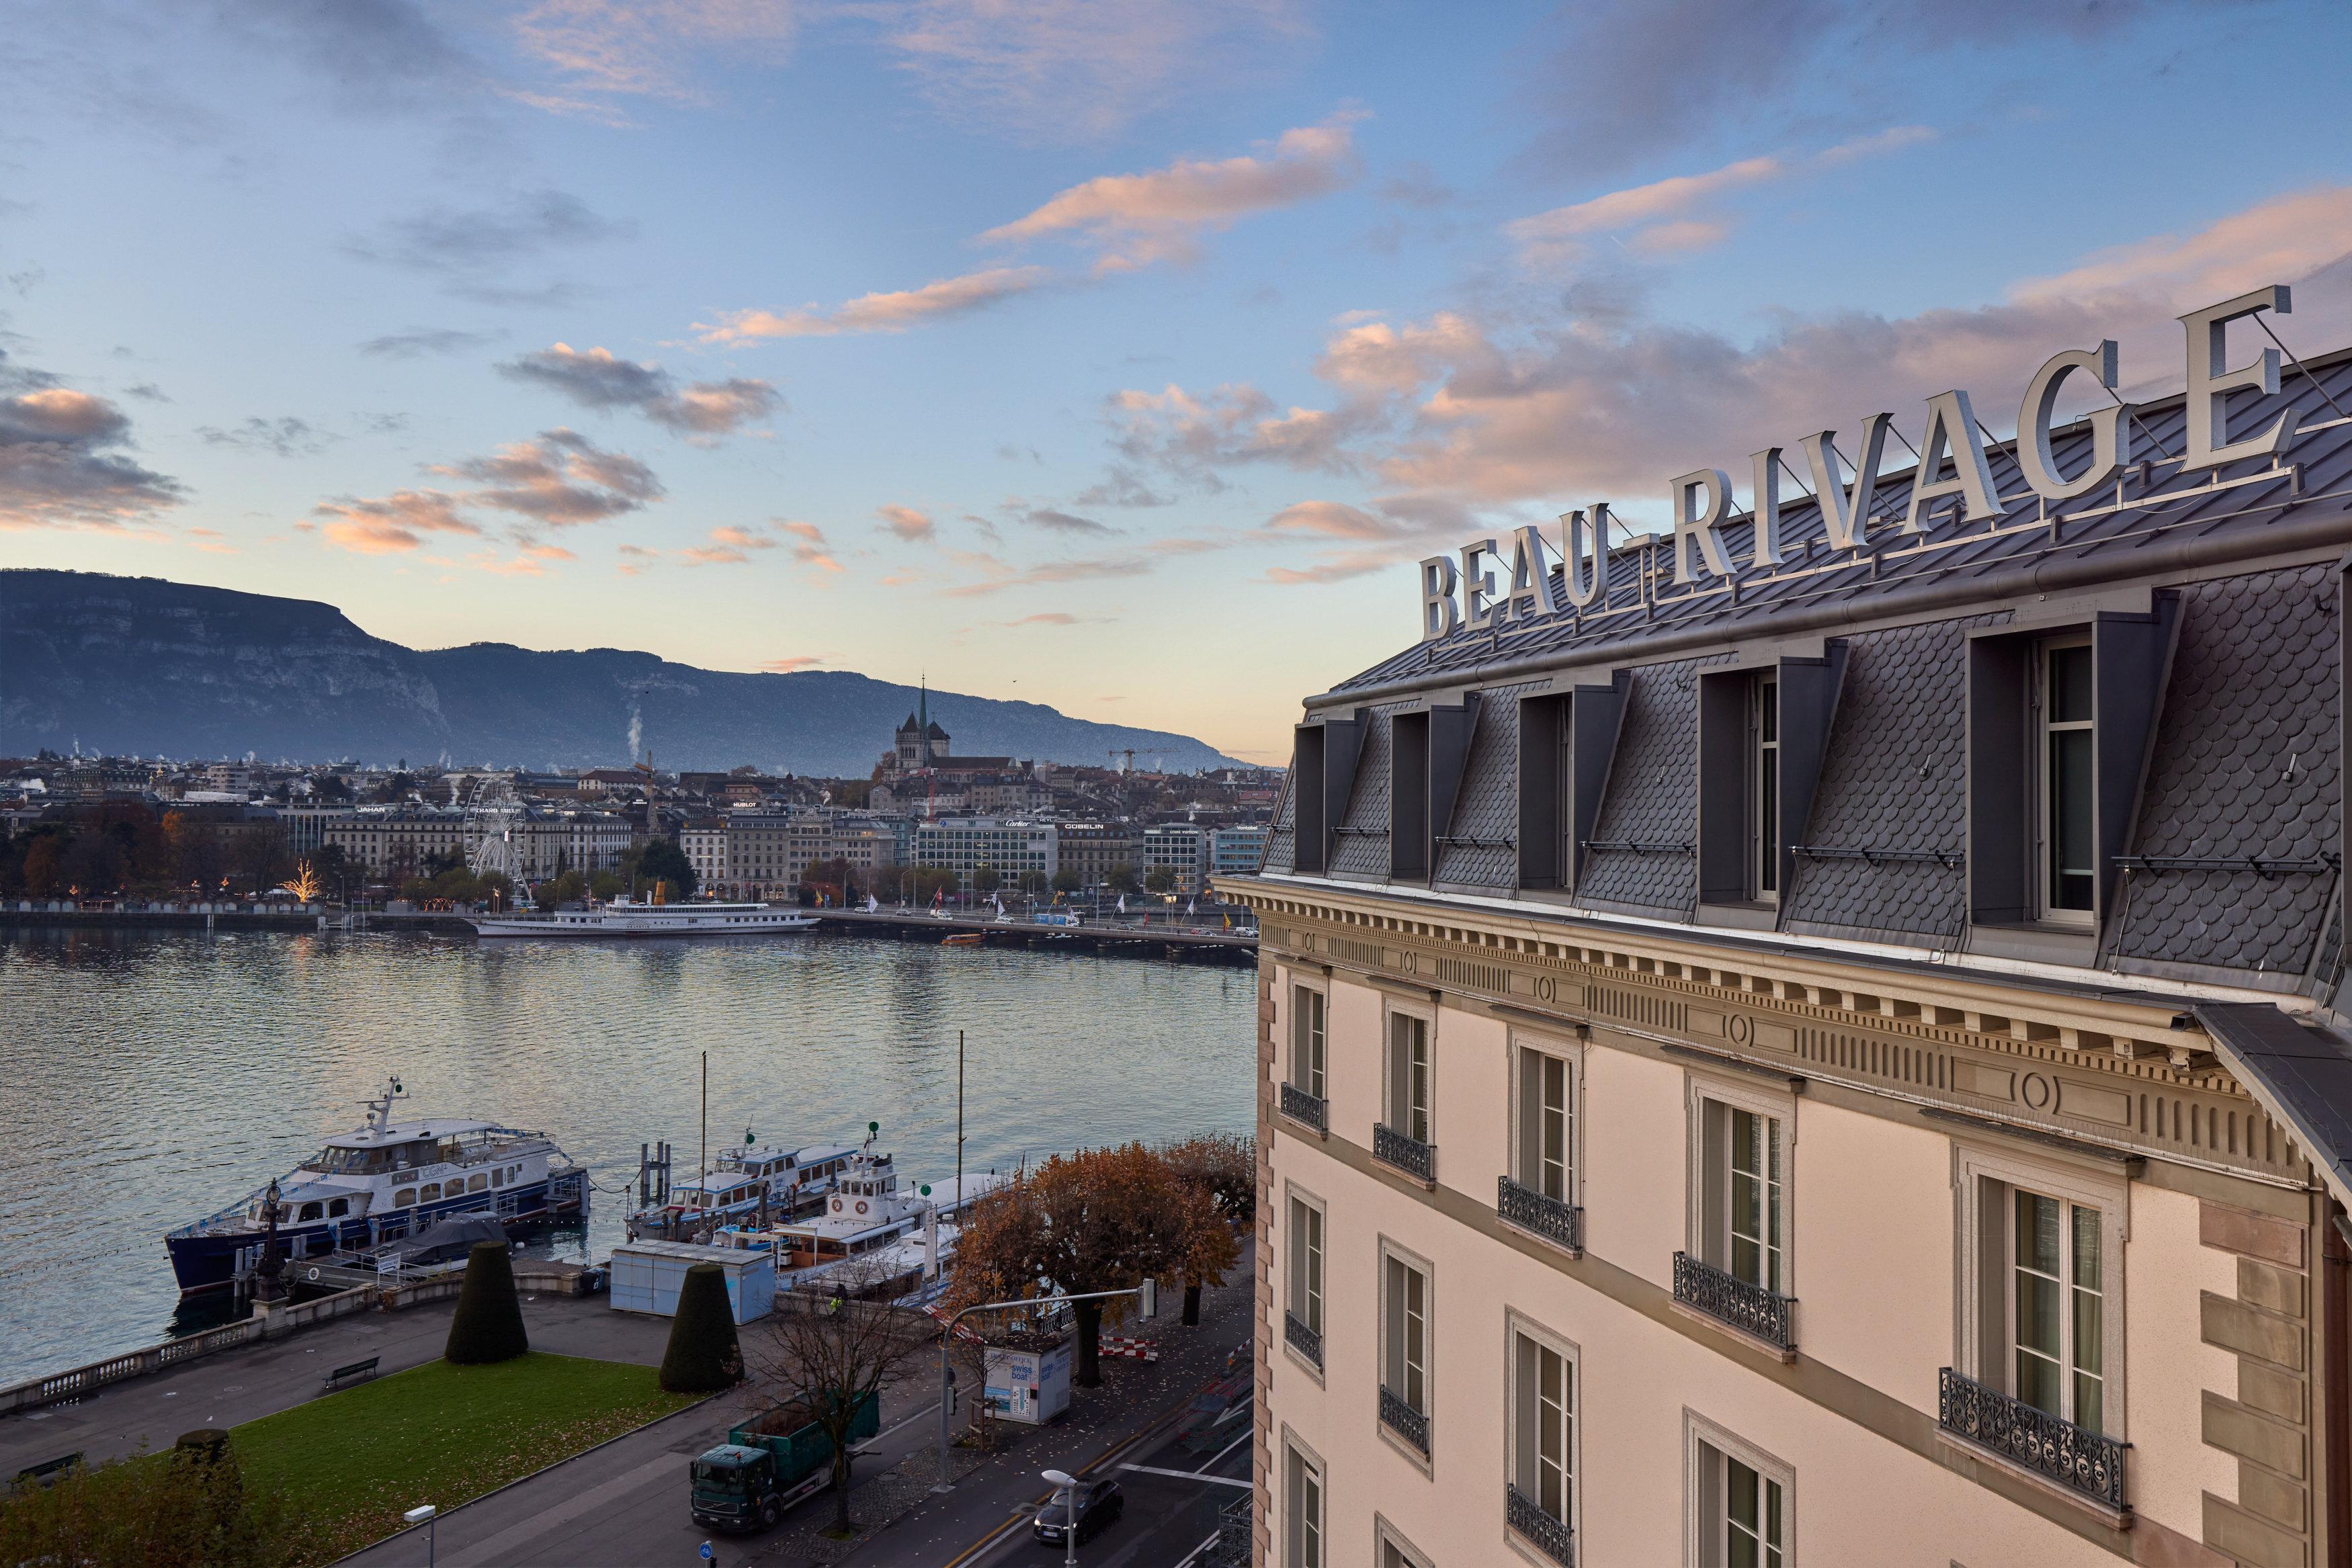 Beau-Rivage Geneve in Geneva, Switzerland